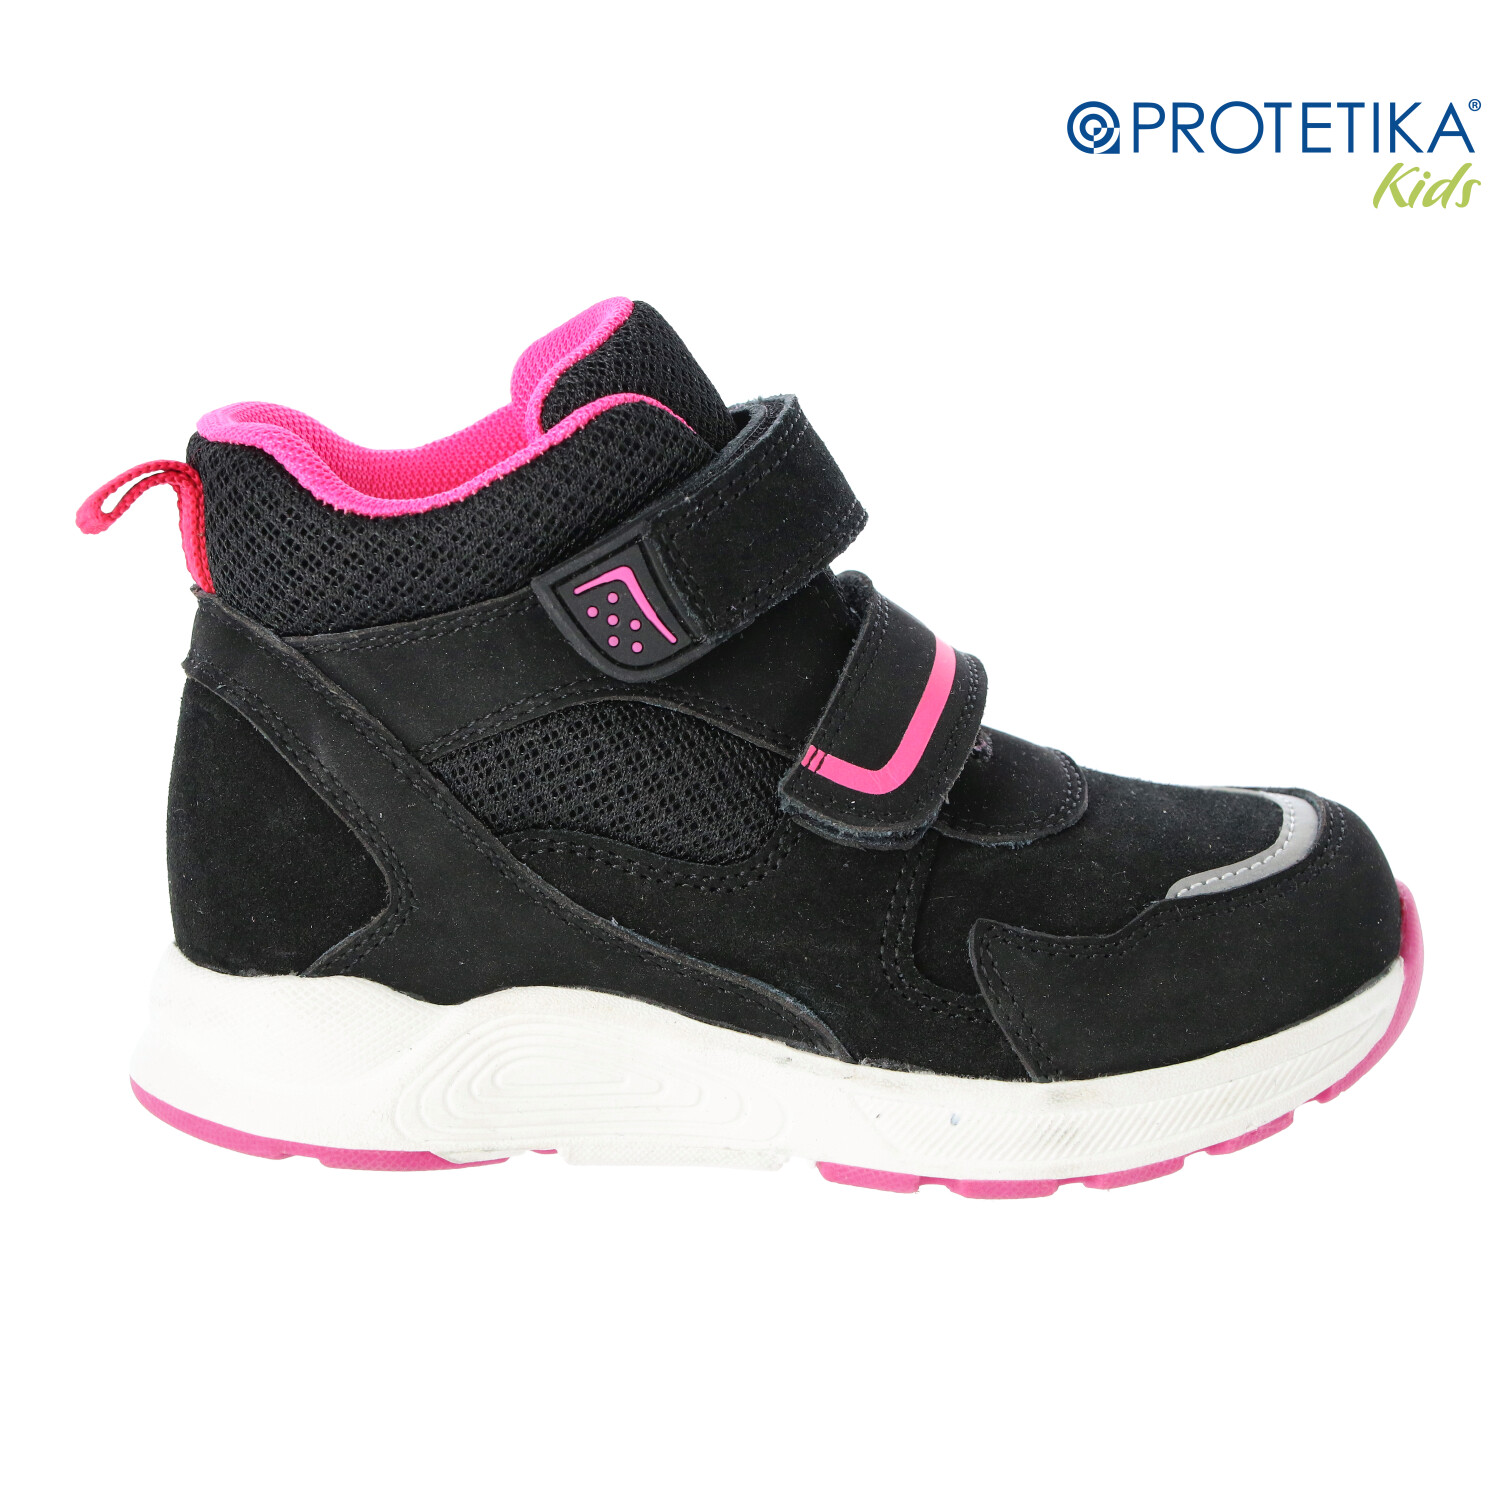 Protetika - topánky  s membránou PRO-TEX ALYSA black